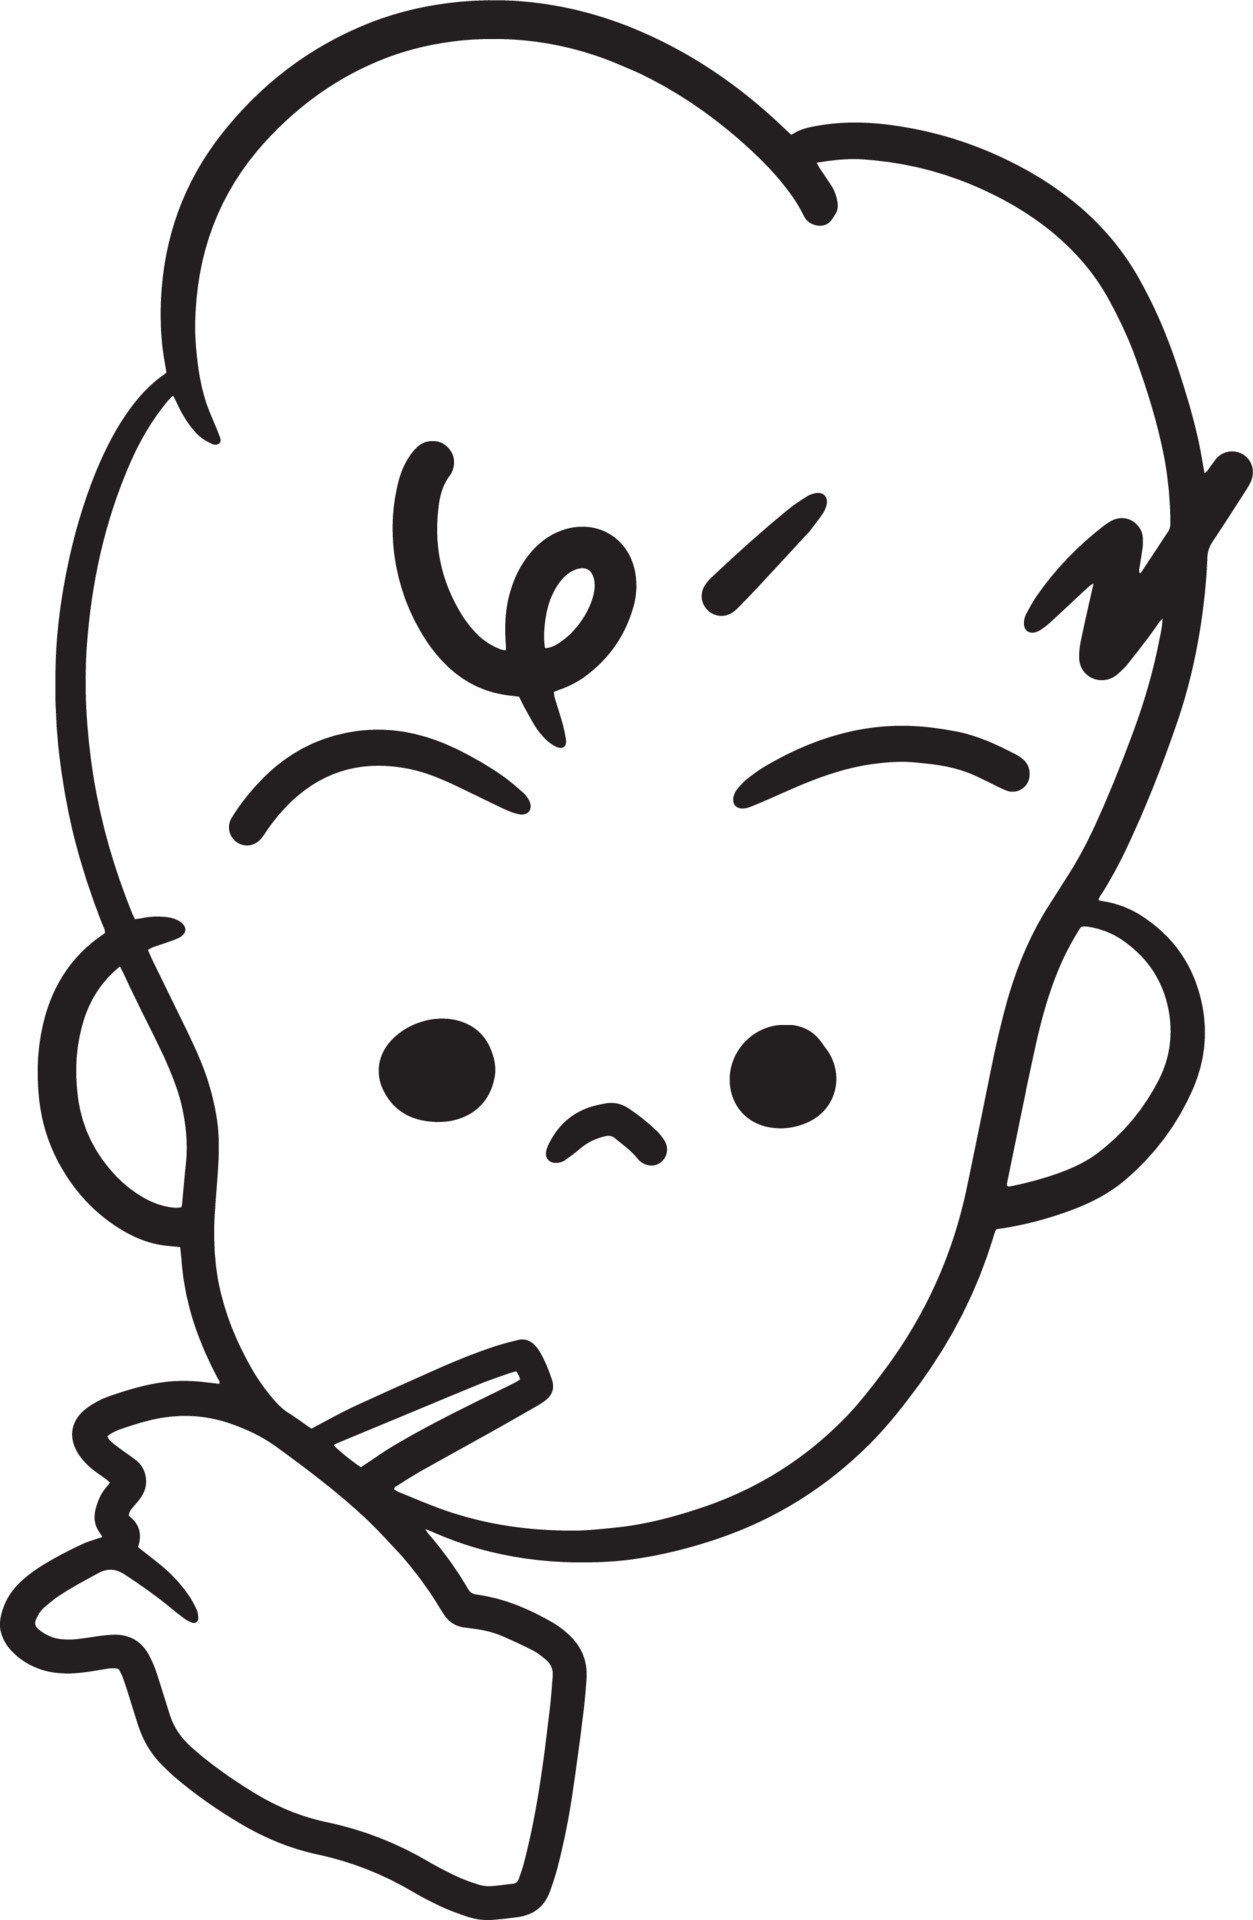 perfil de logotipo kawaii de clipart de desenho vetorial de garota